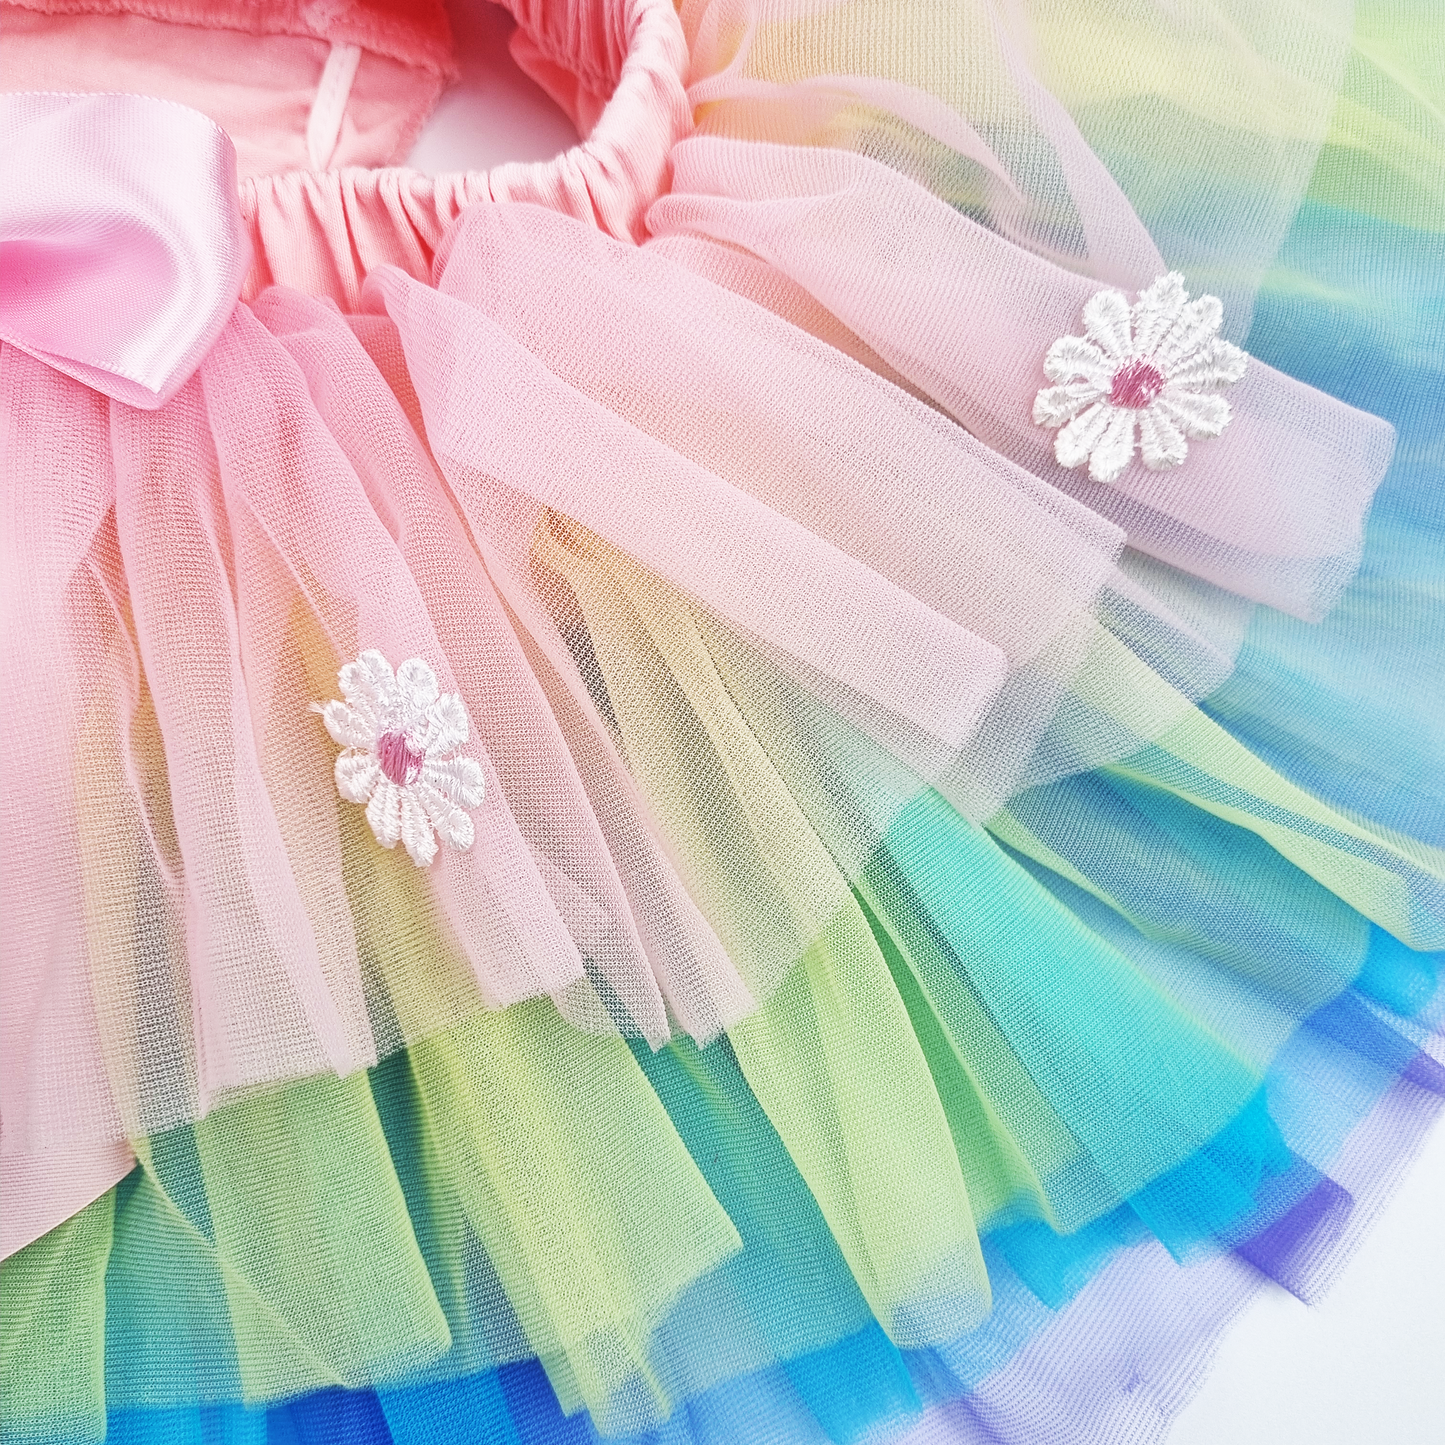 Rainbow Soft Layered Tutu Skirt with Embroidered flowers and Headband Set